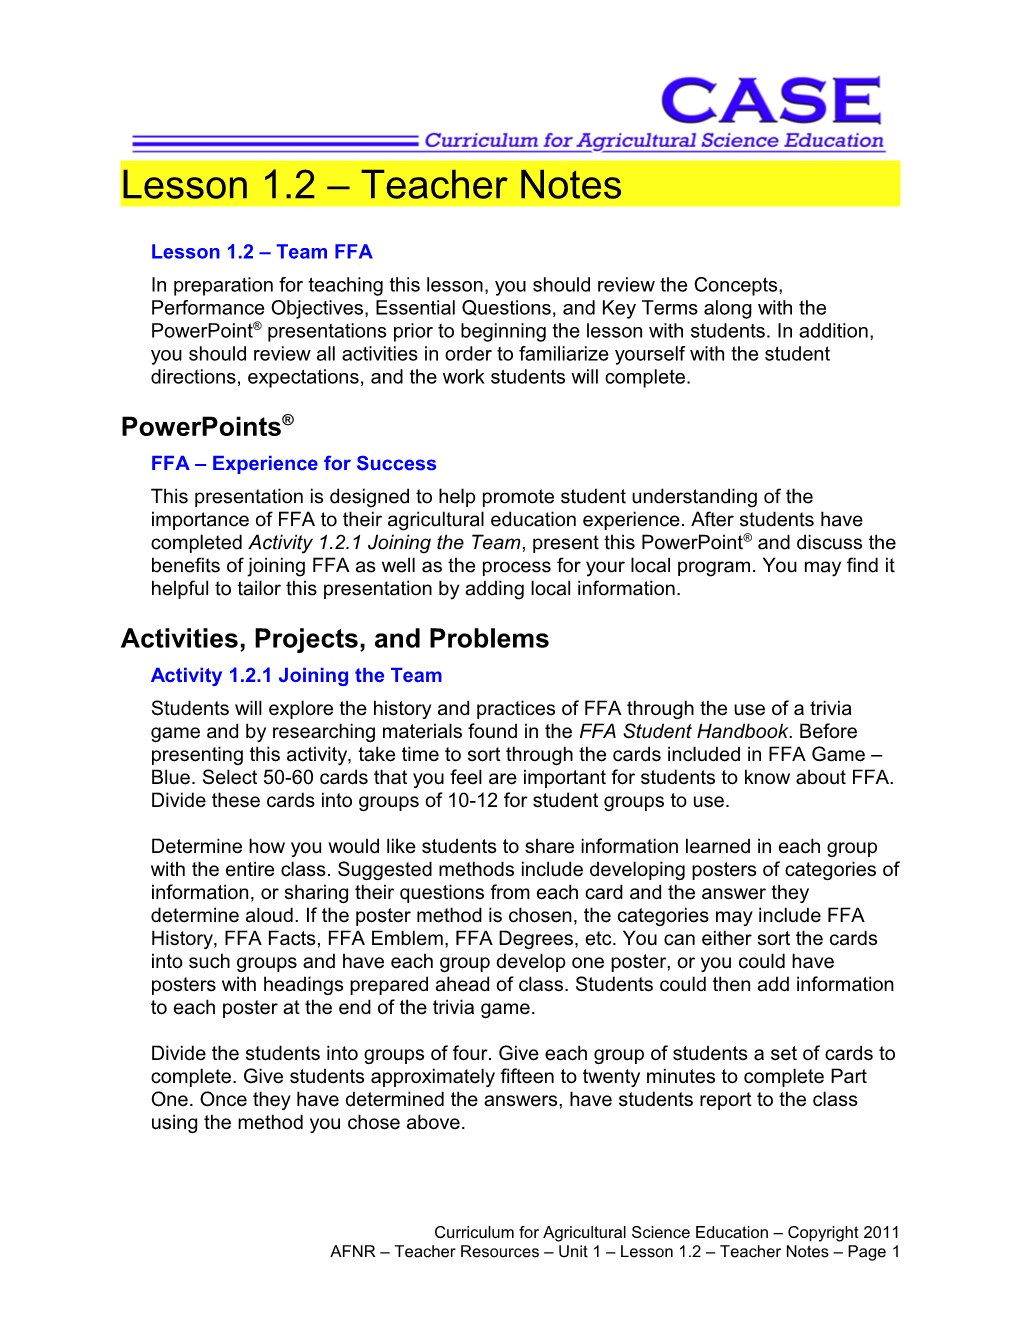 Lesson 1.2 Teacher Notes